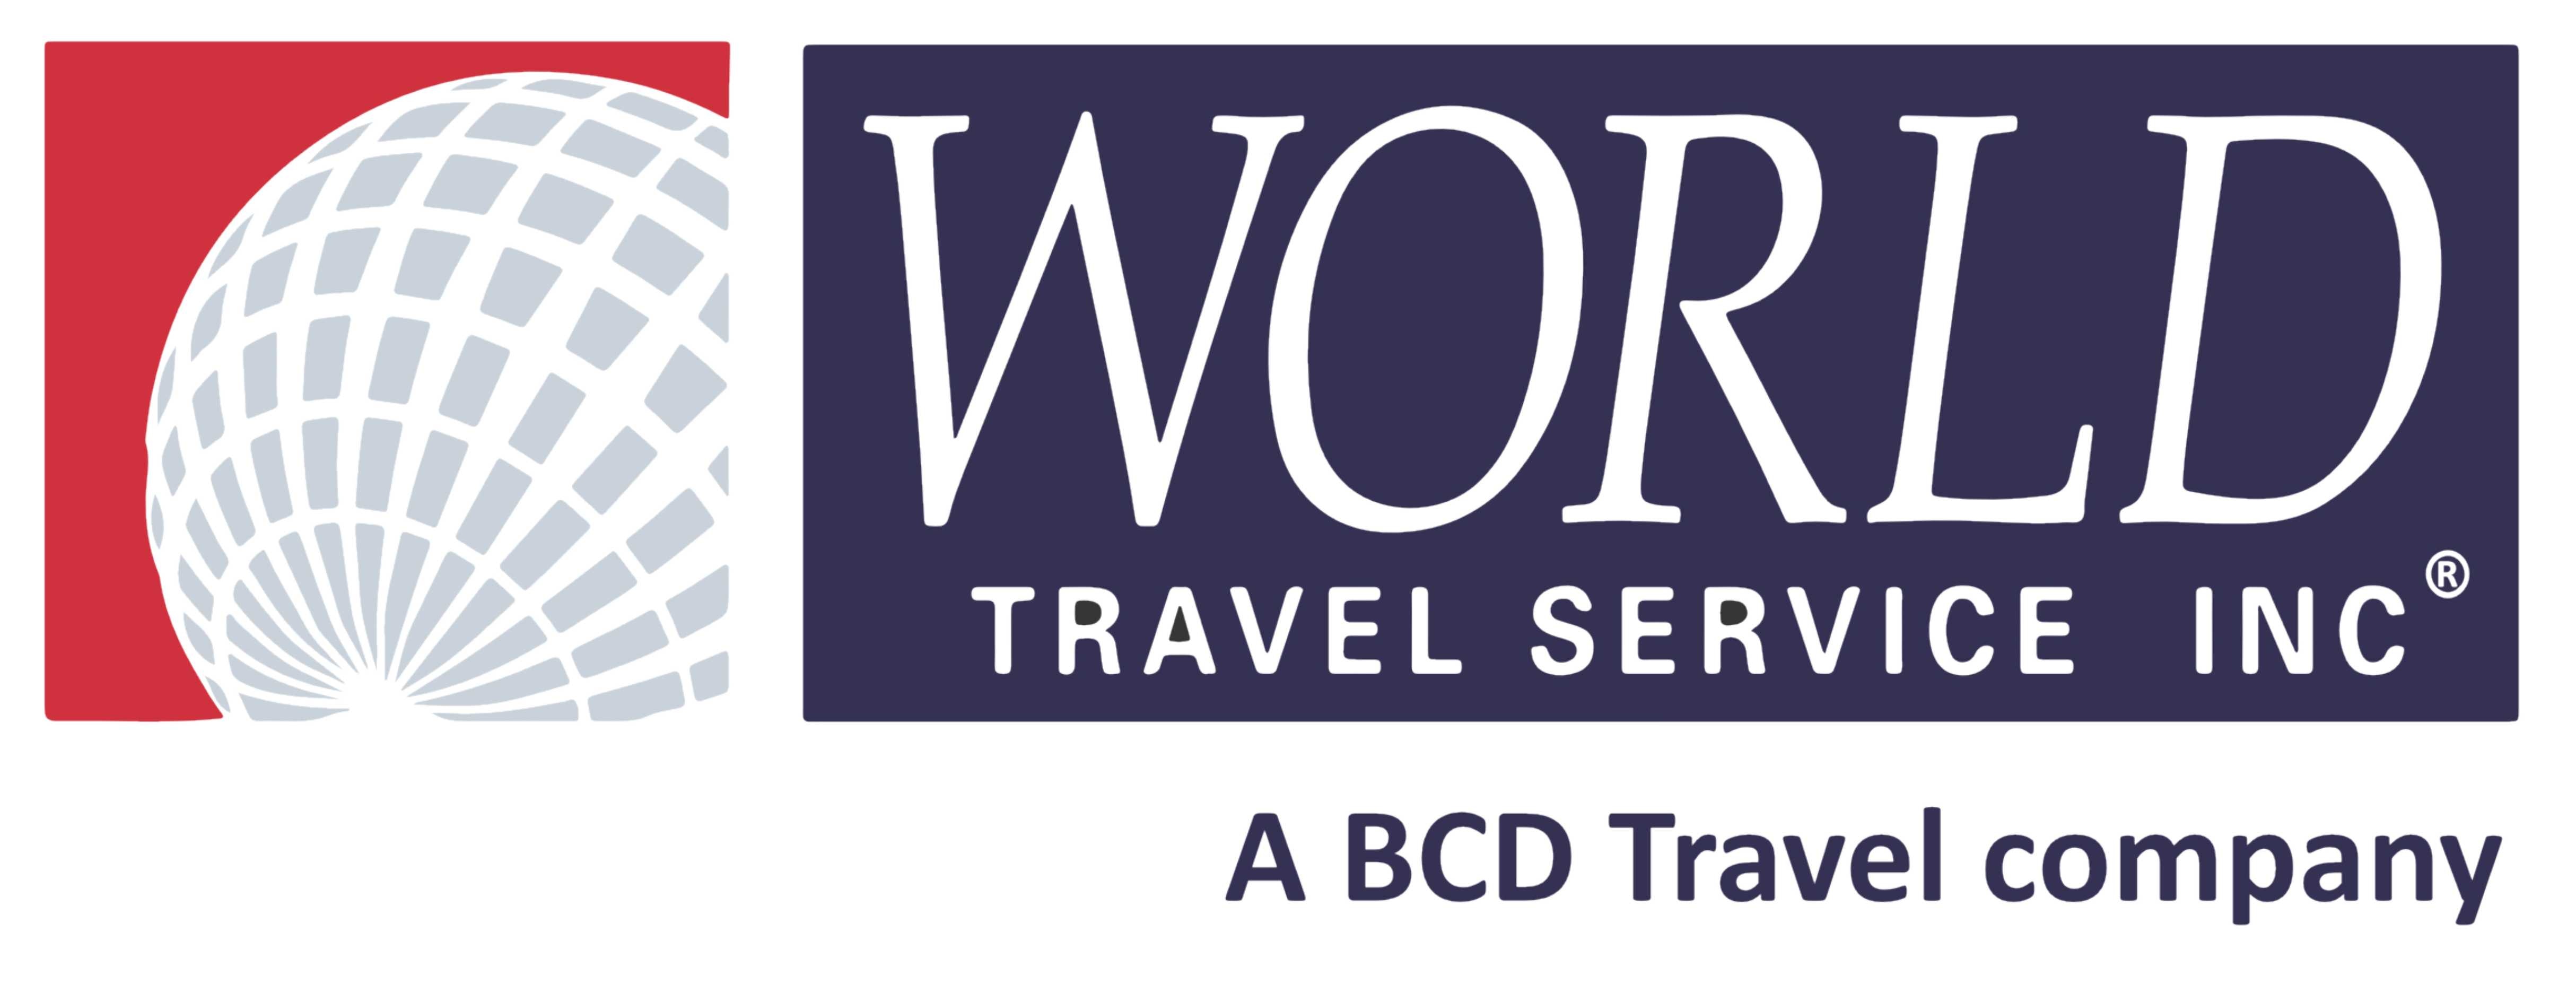 international travel management companies